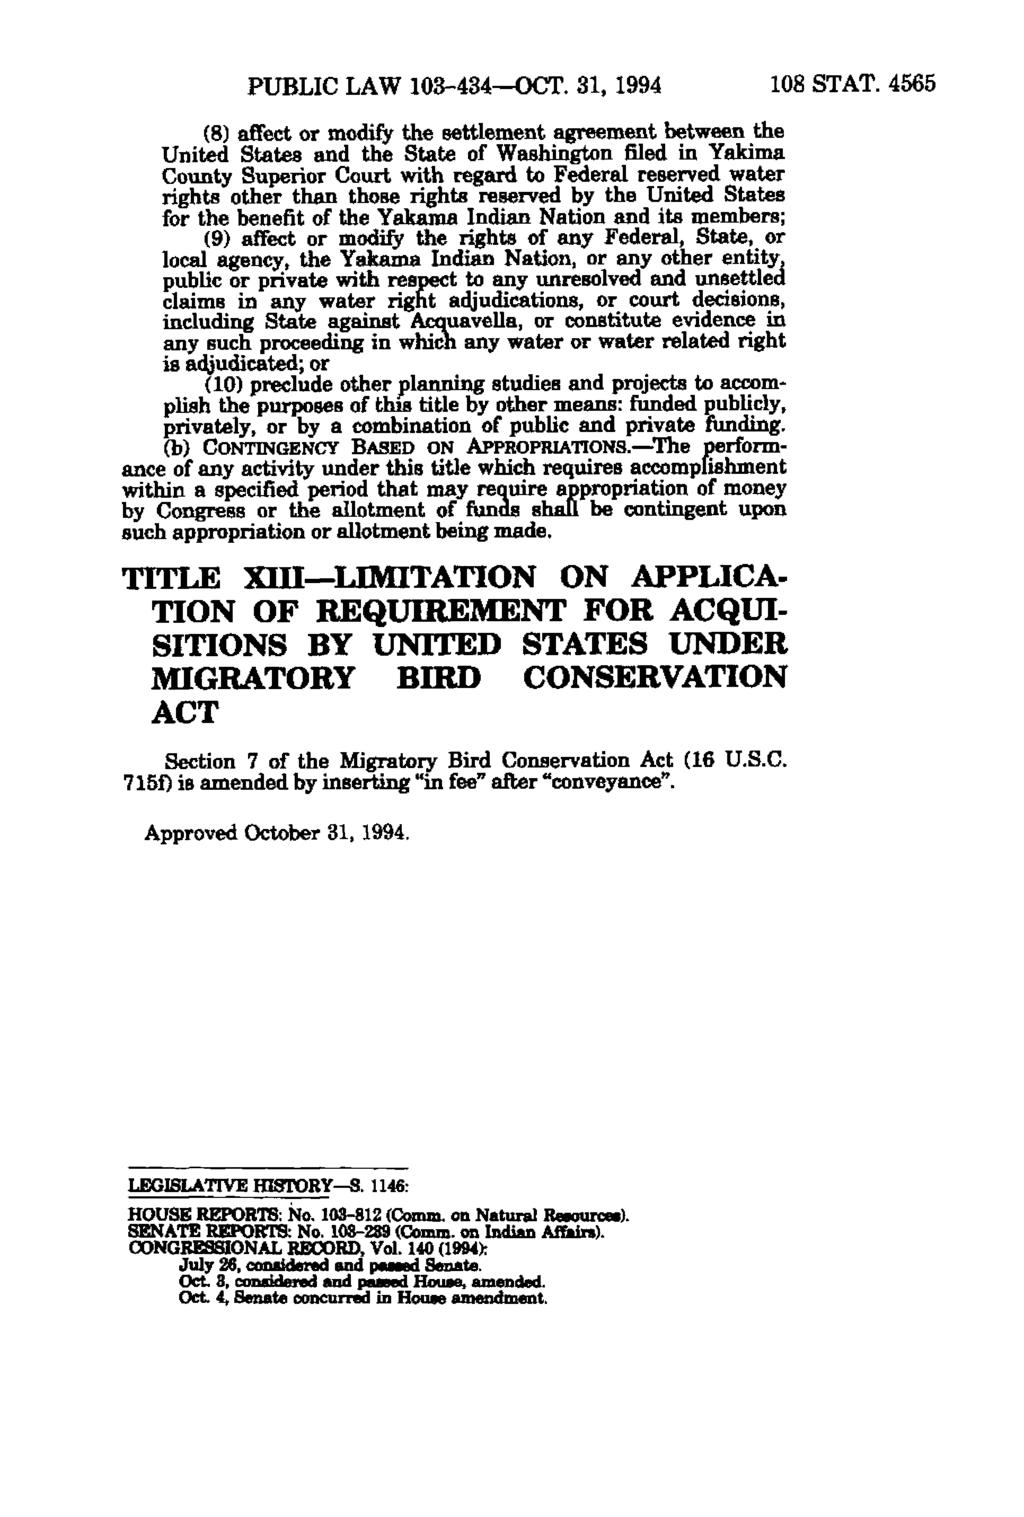 PUBLIC LAW 103-434 OCT. 31, 1994 108 STAT.